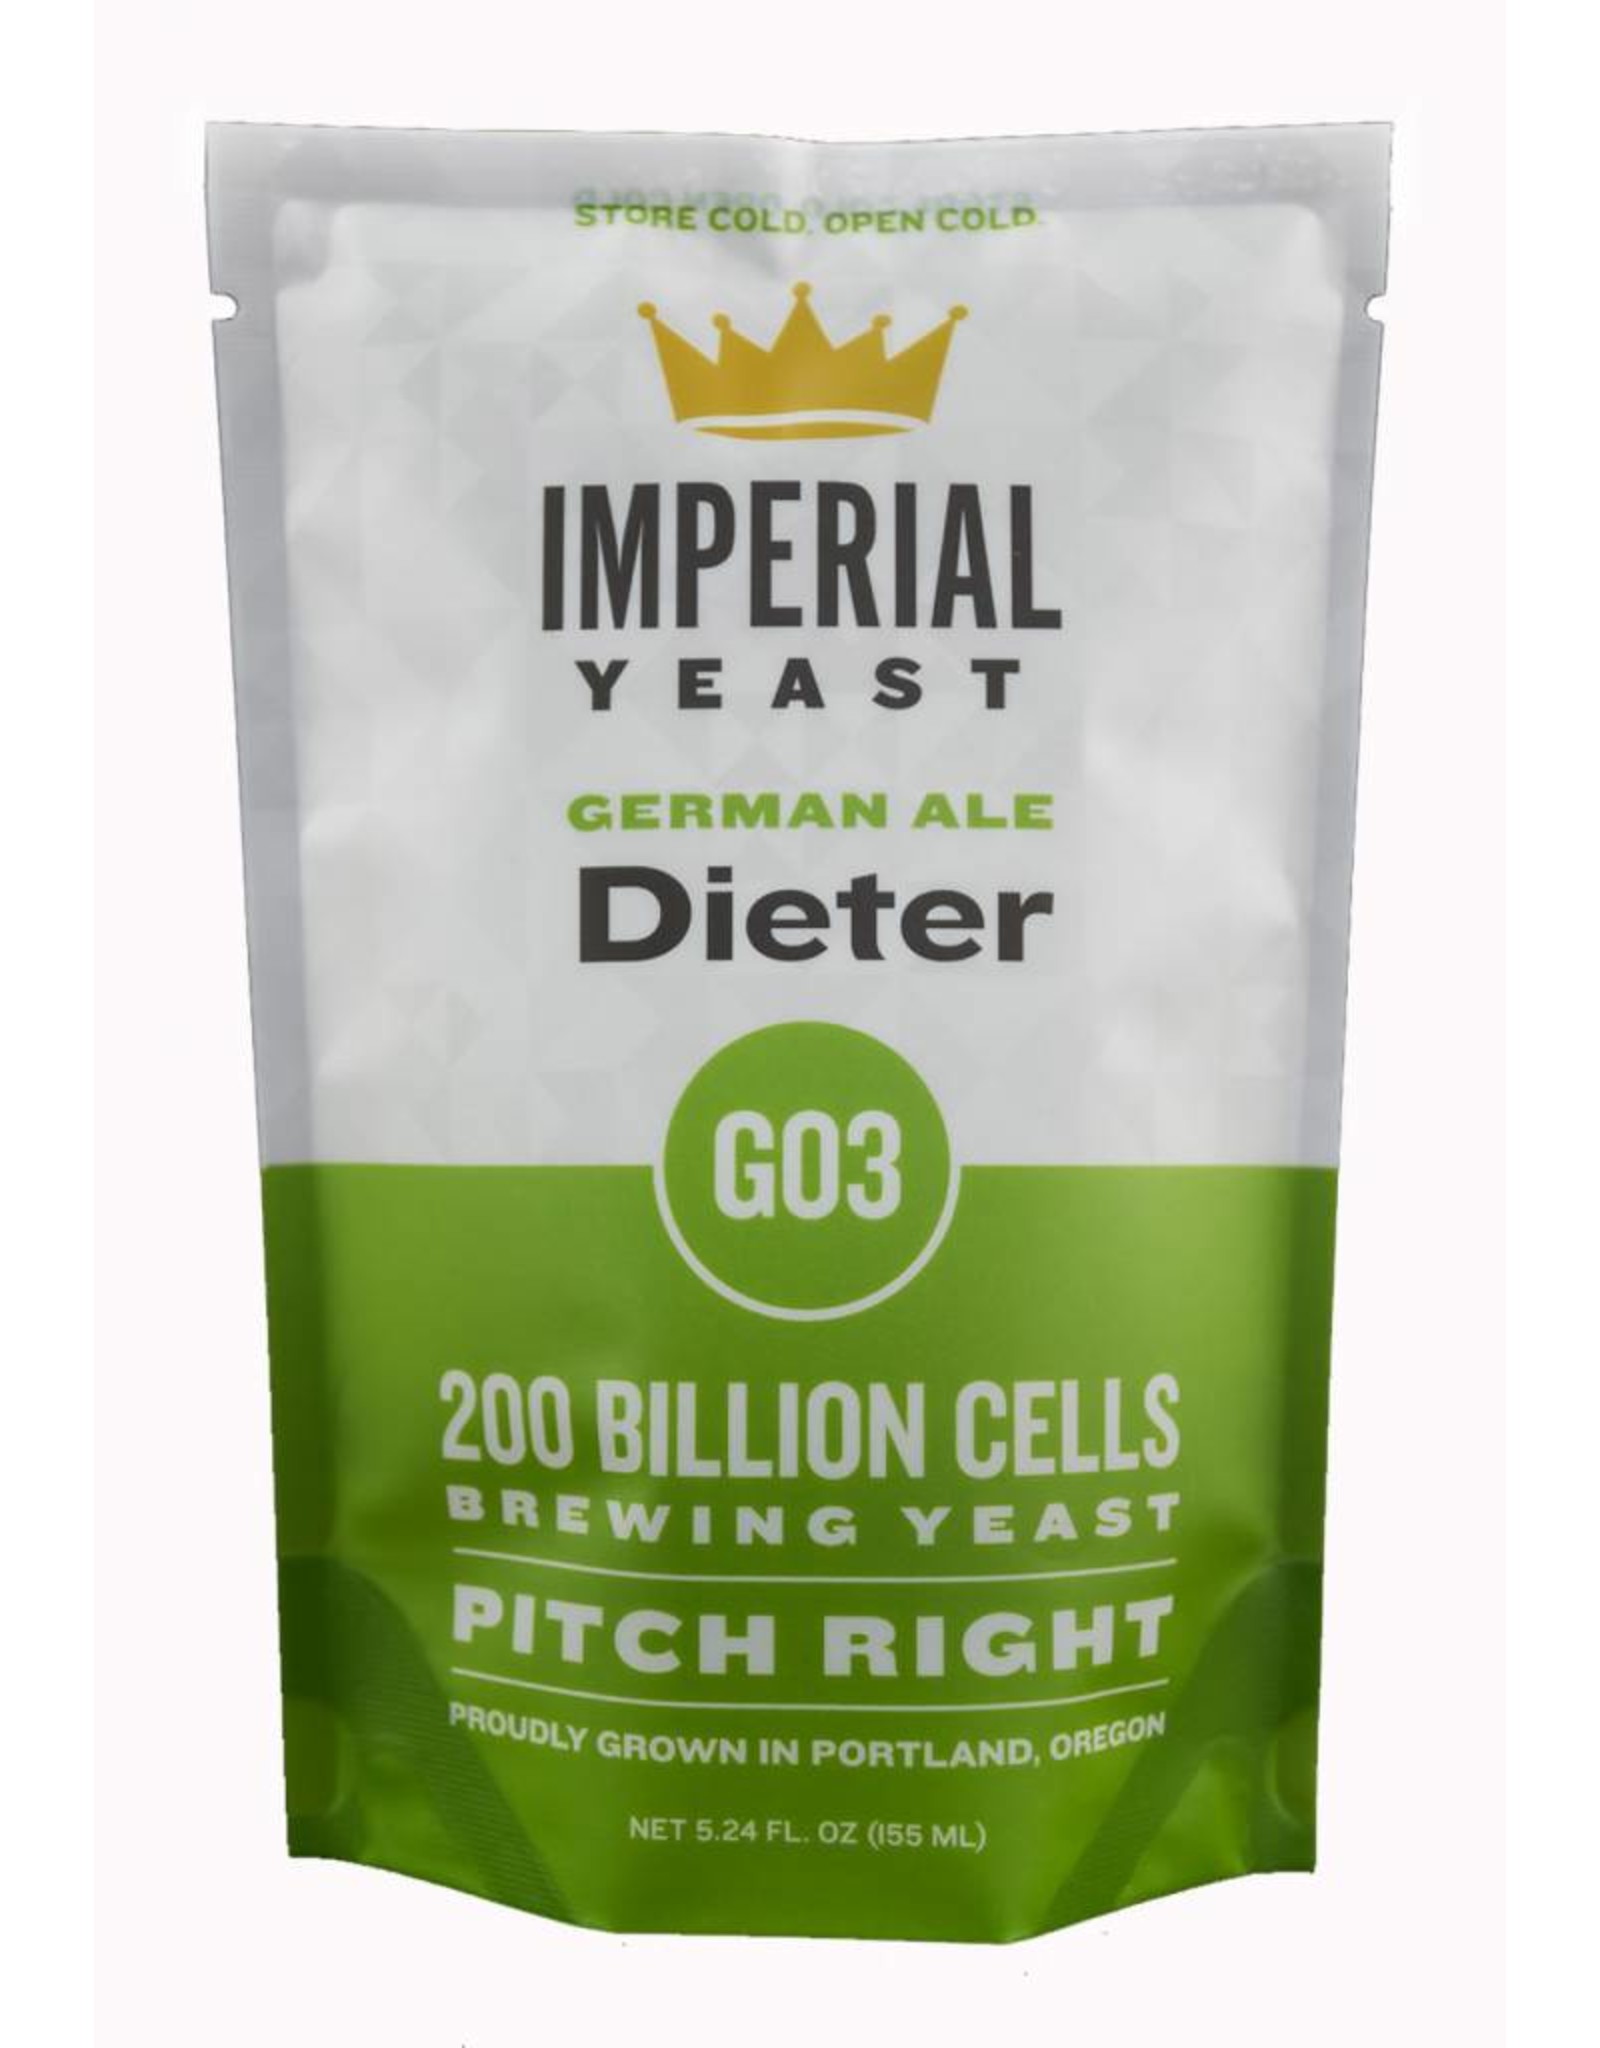 Imperial Yeast Imperial Yeast G03 - Dieter